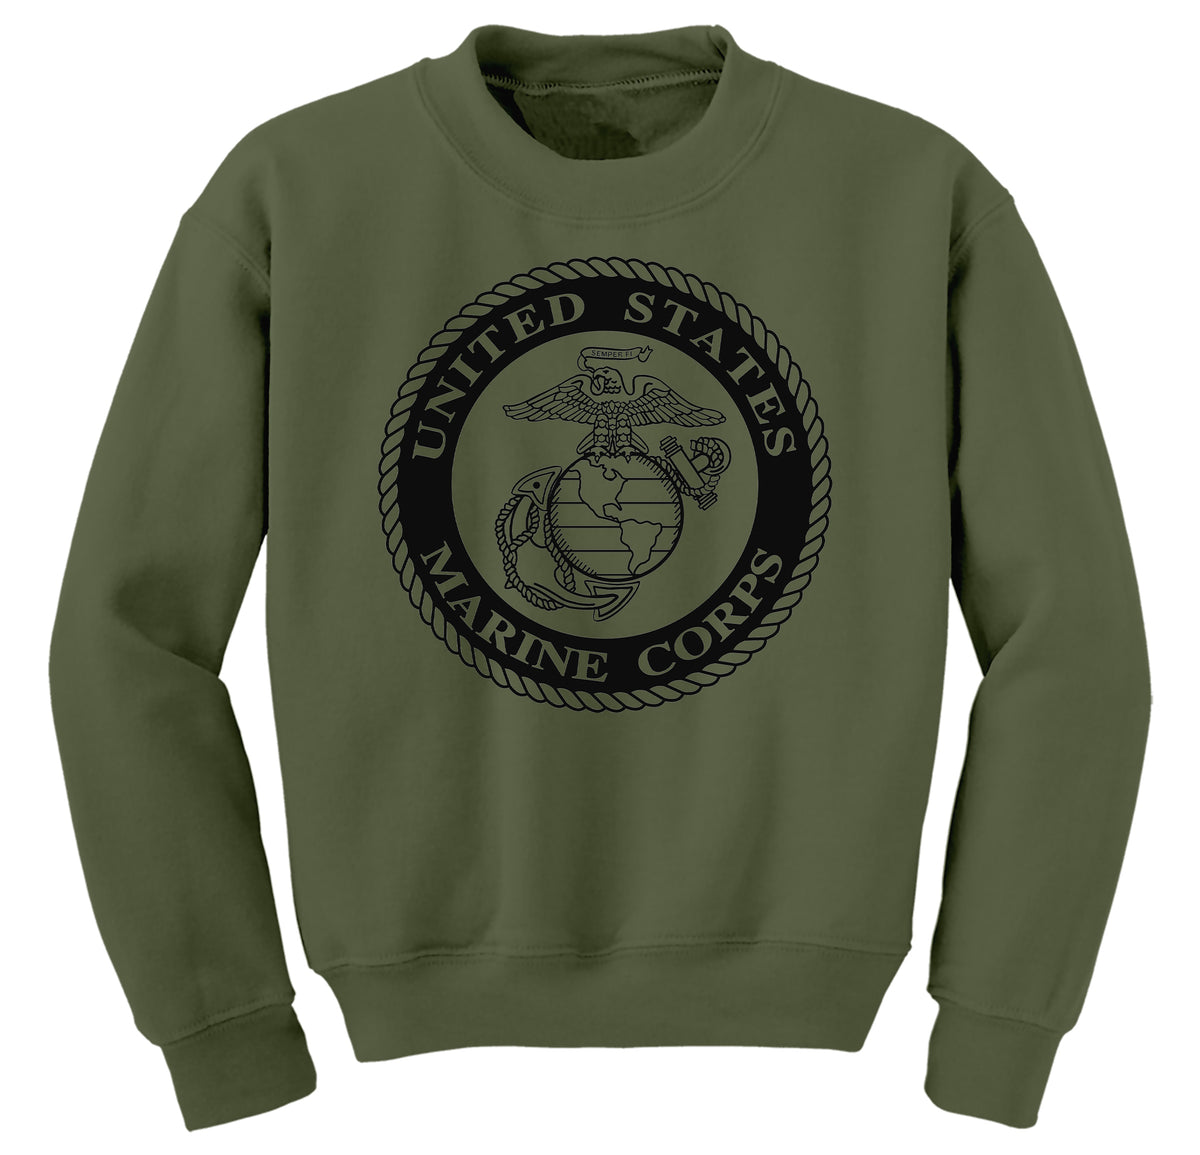 USMC Big Seal Sweatshirt